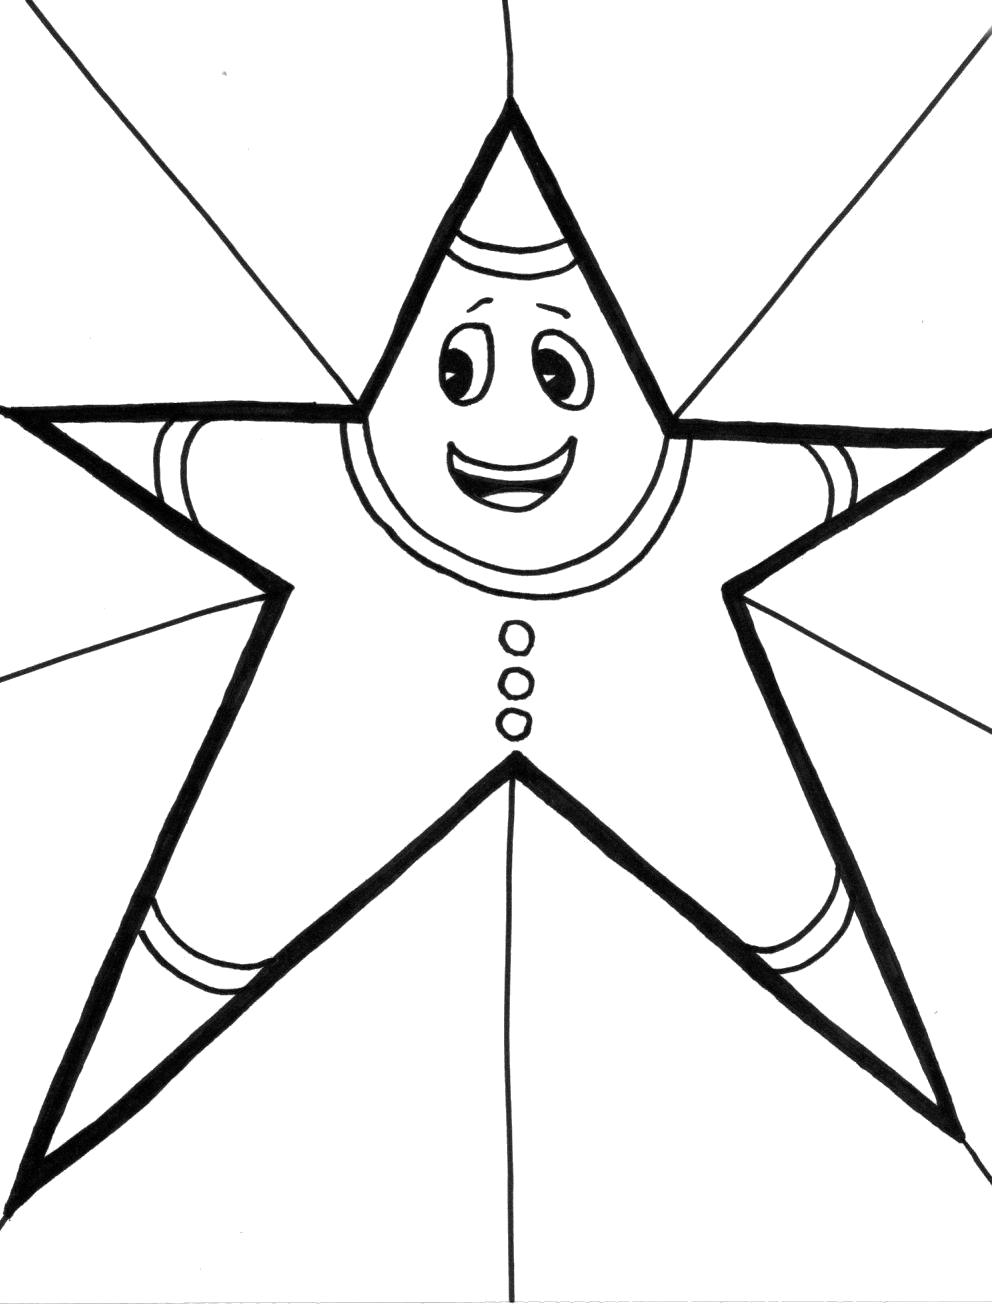 Название: Раскраска Раскраска звезда. Категория: геометрические фигуры. Теги: звезда.